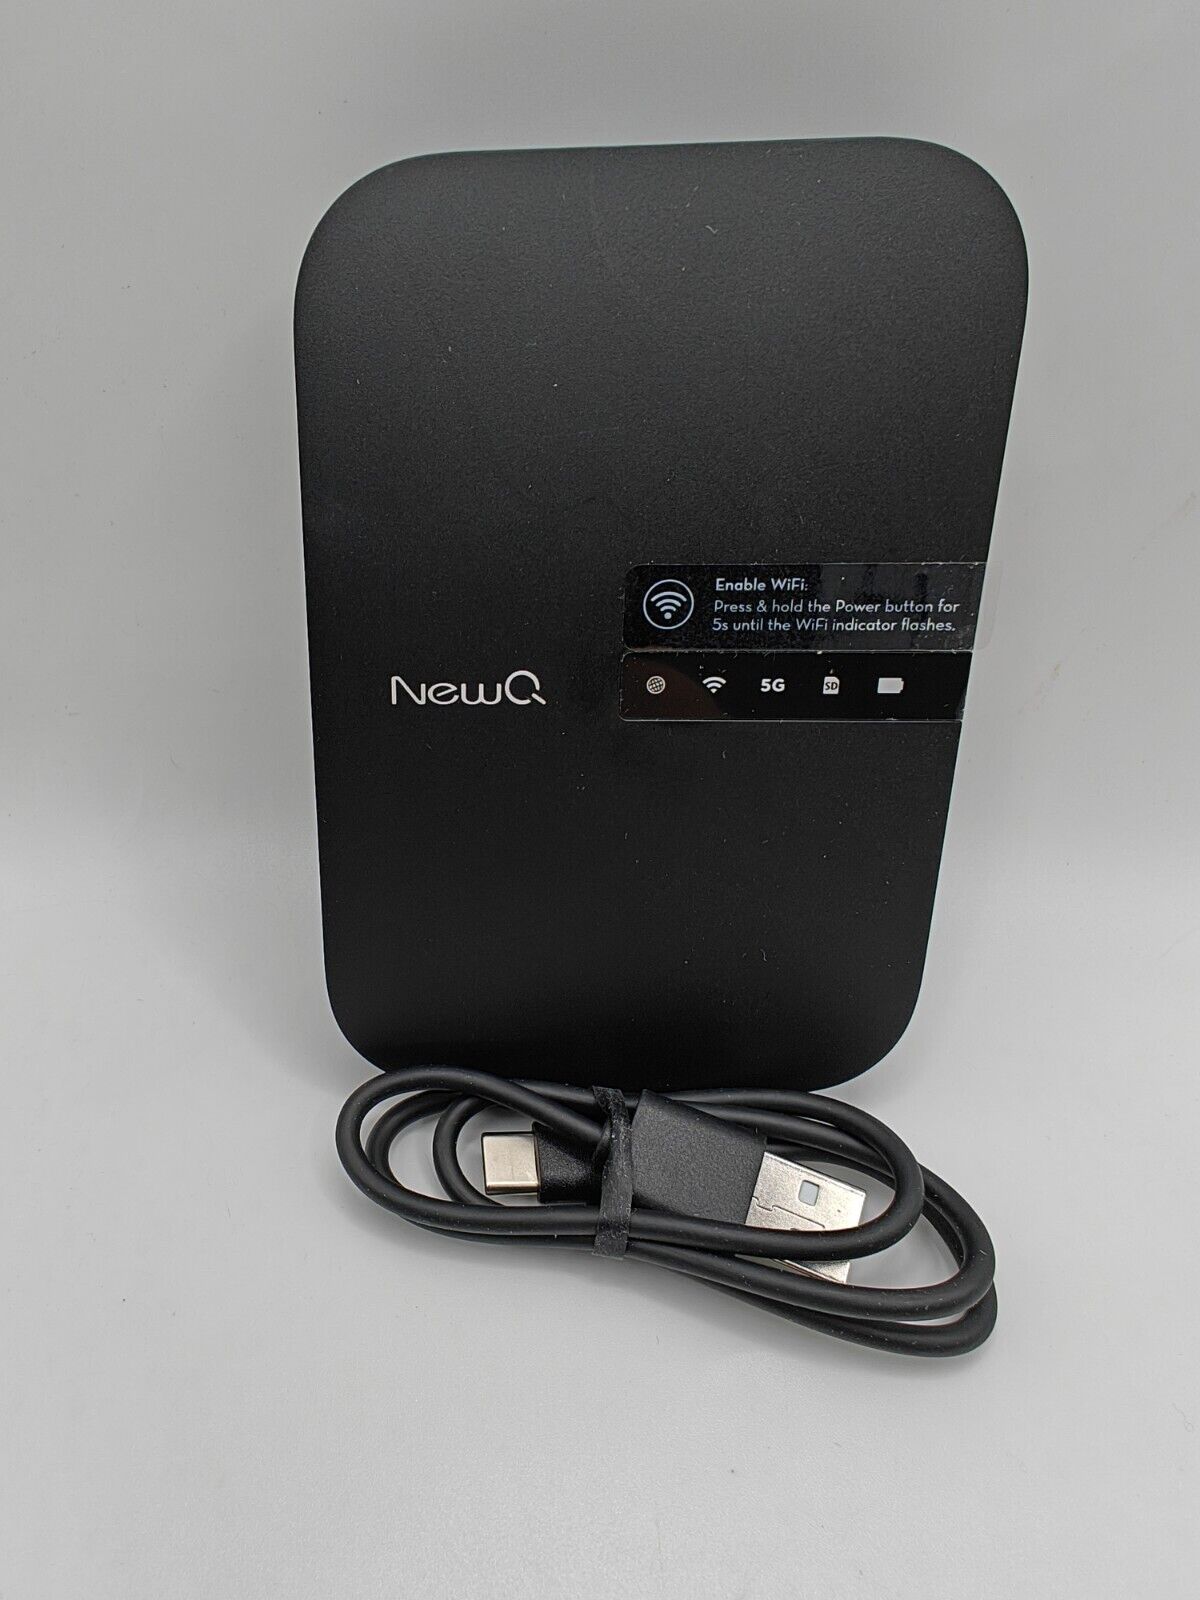 NewQ B3 Filehub Travel Router: Portable Hard Drive SD Card Reader & Powerbank